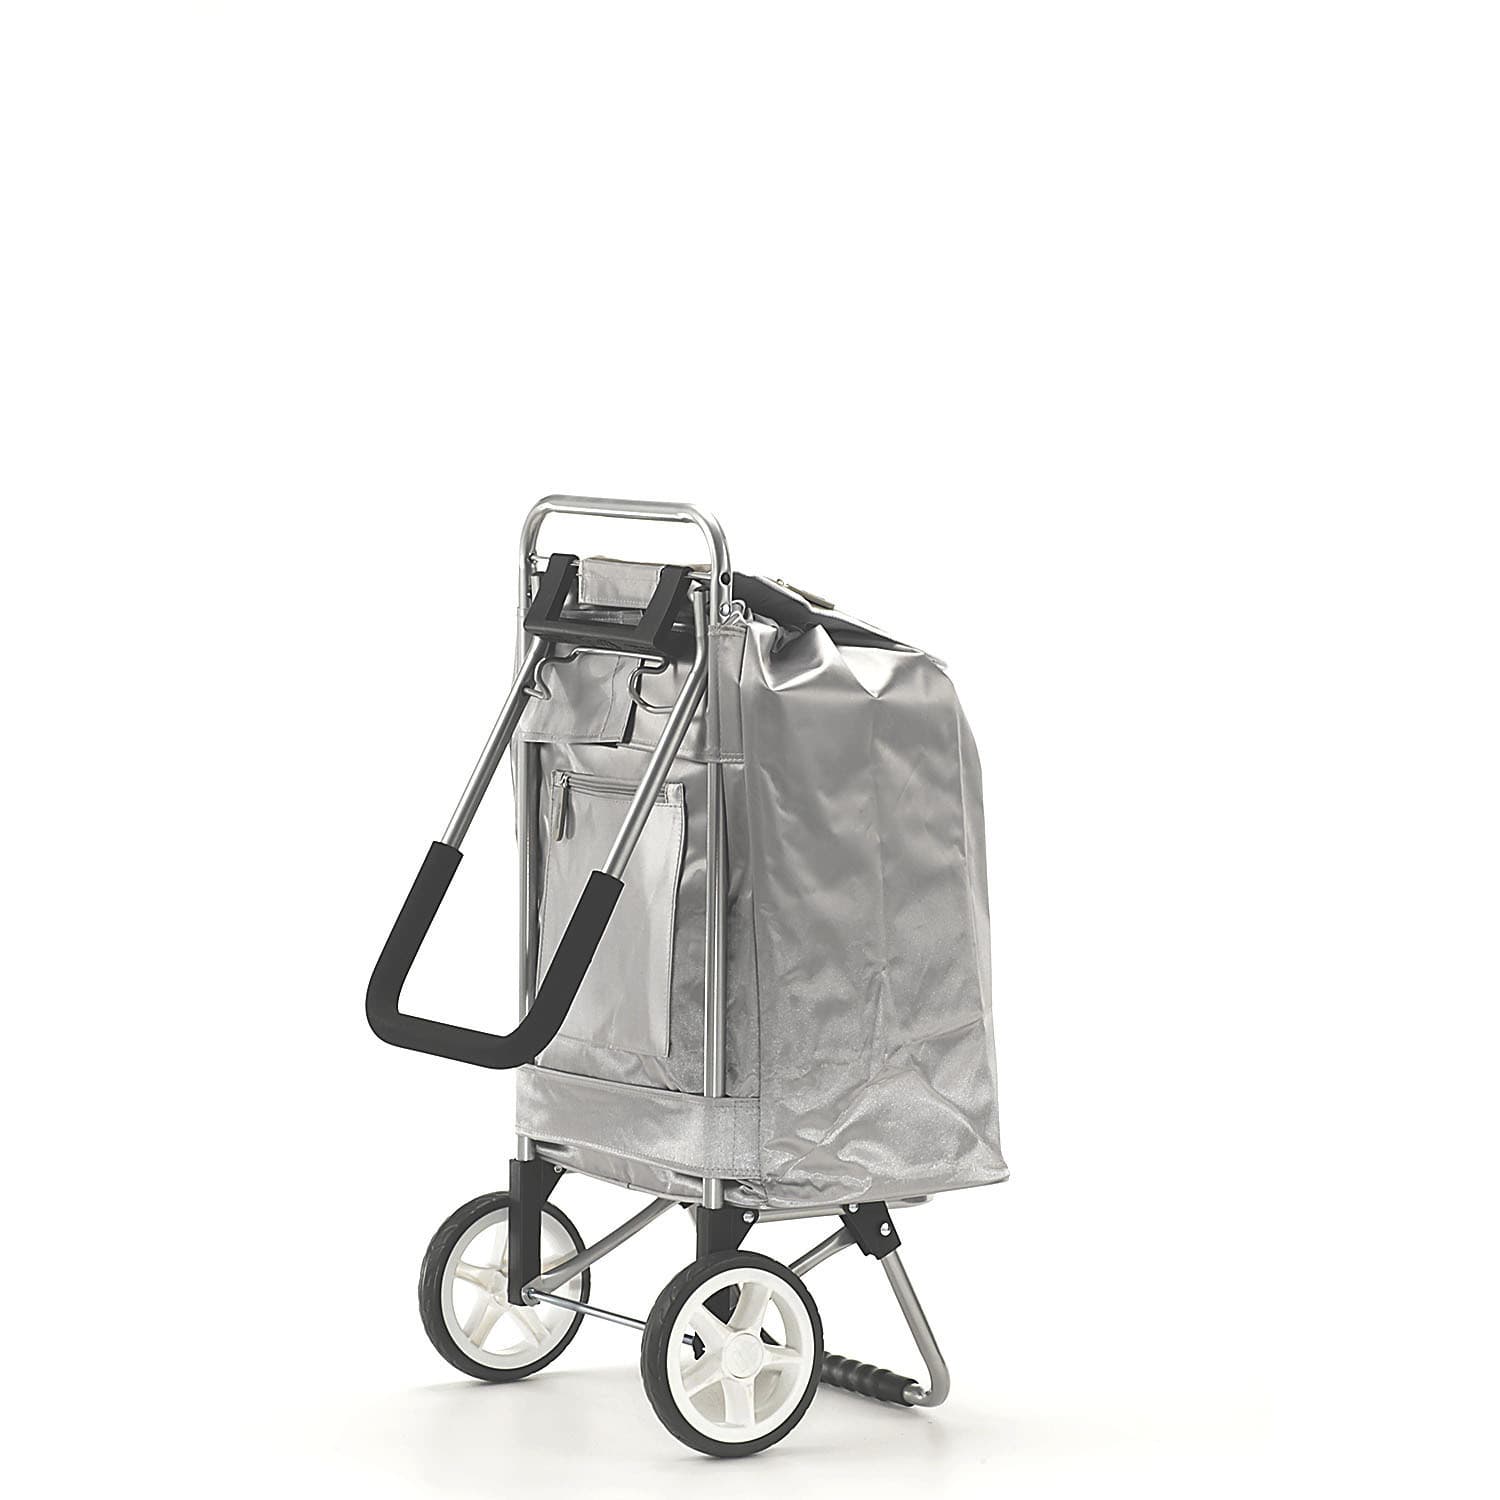 Складная сумка-тележка Gimi Flexi Foldable Wheeled Shopping Trolley